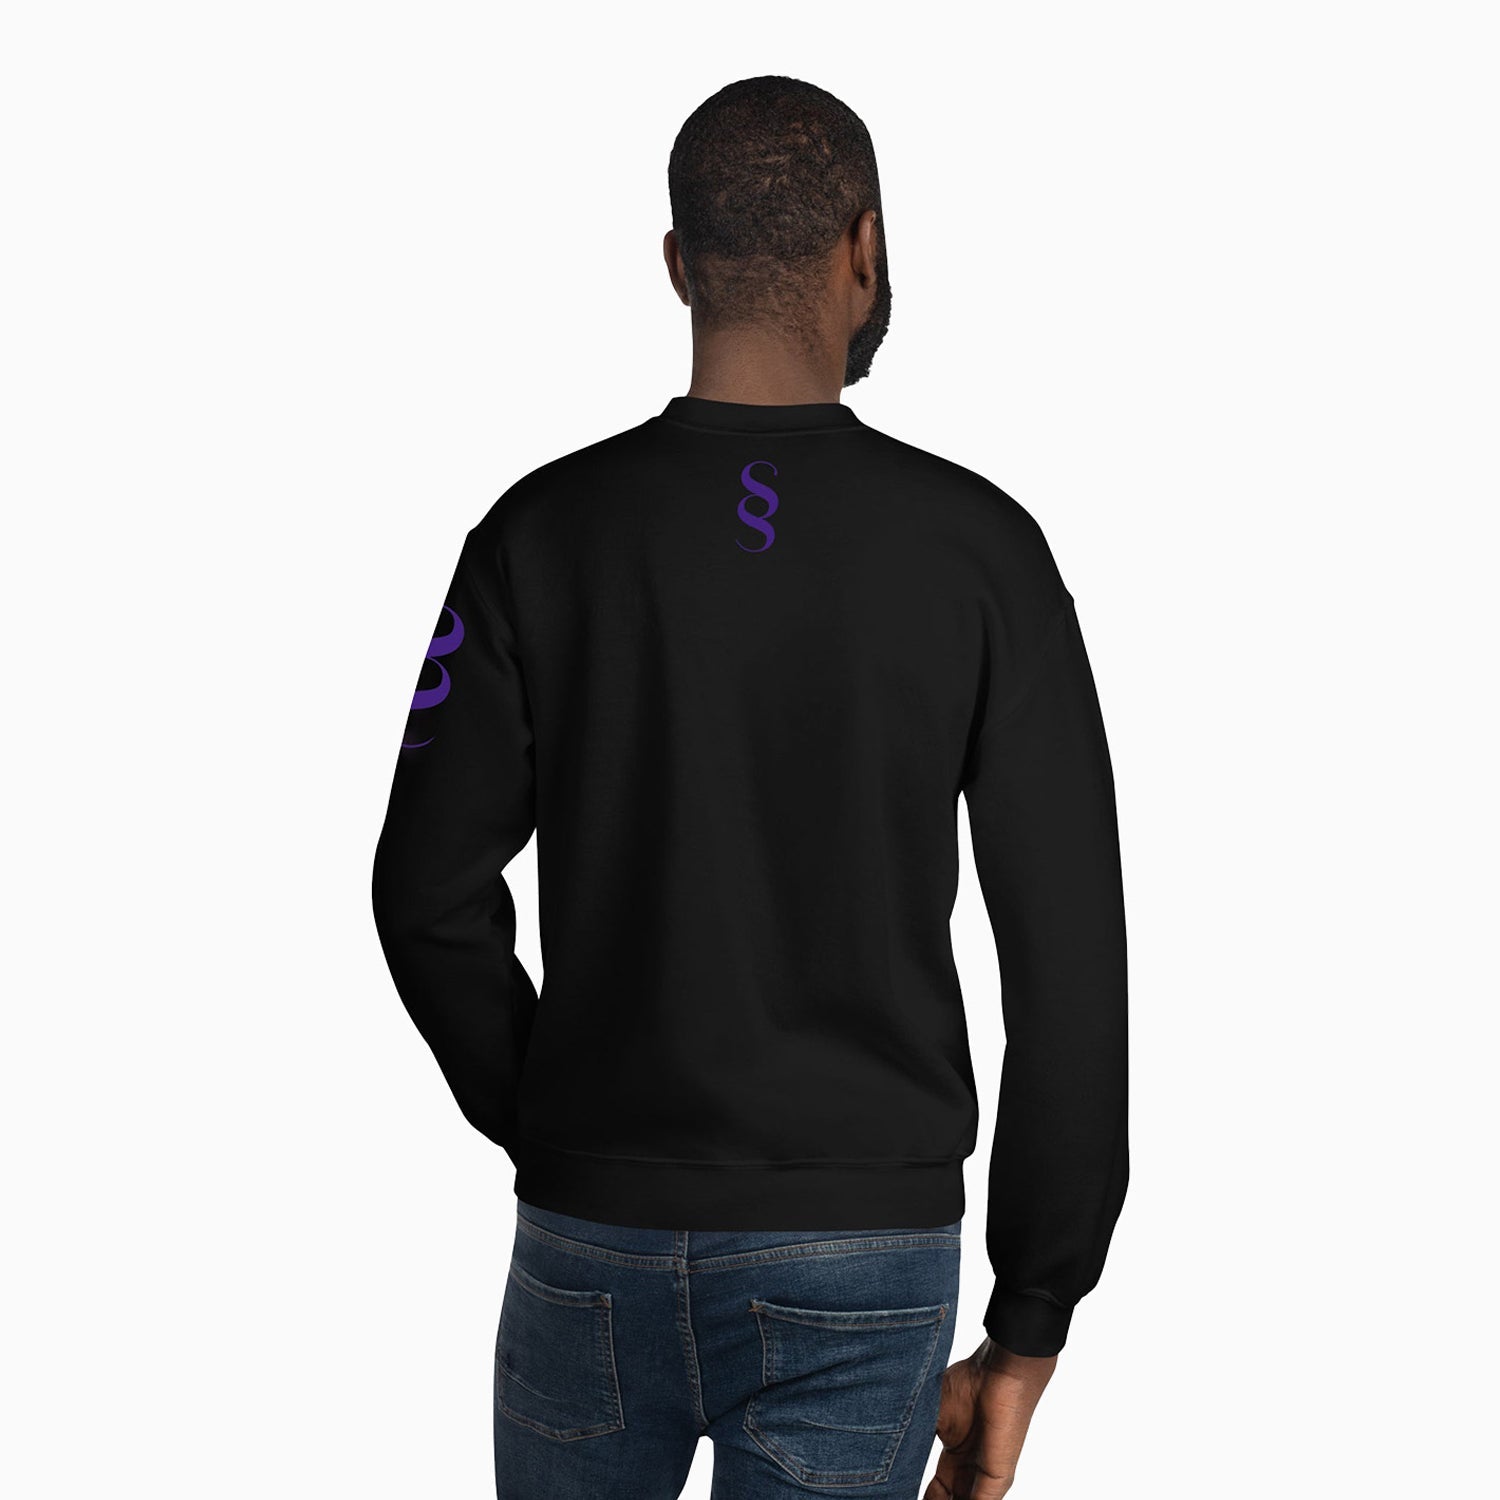 basic-design-printed-crew-neck-black-sweatshirt-for-men-sc105-010